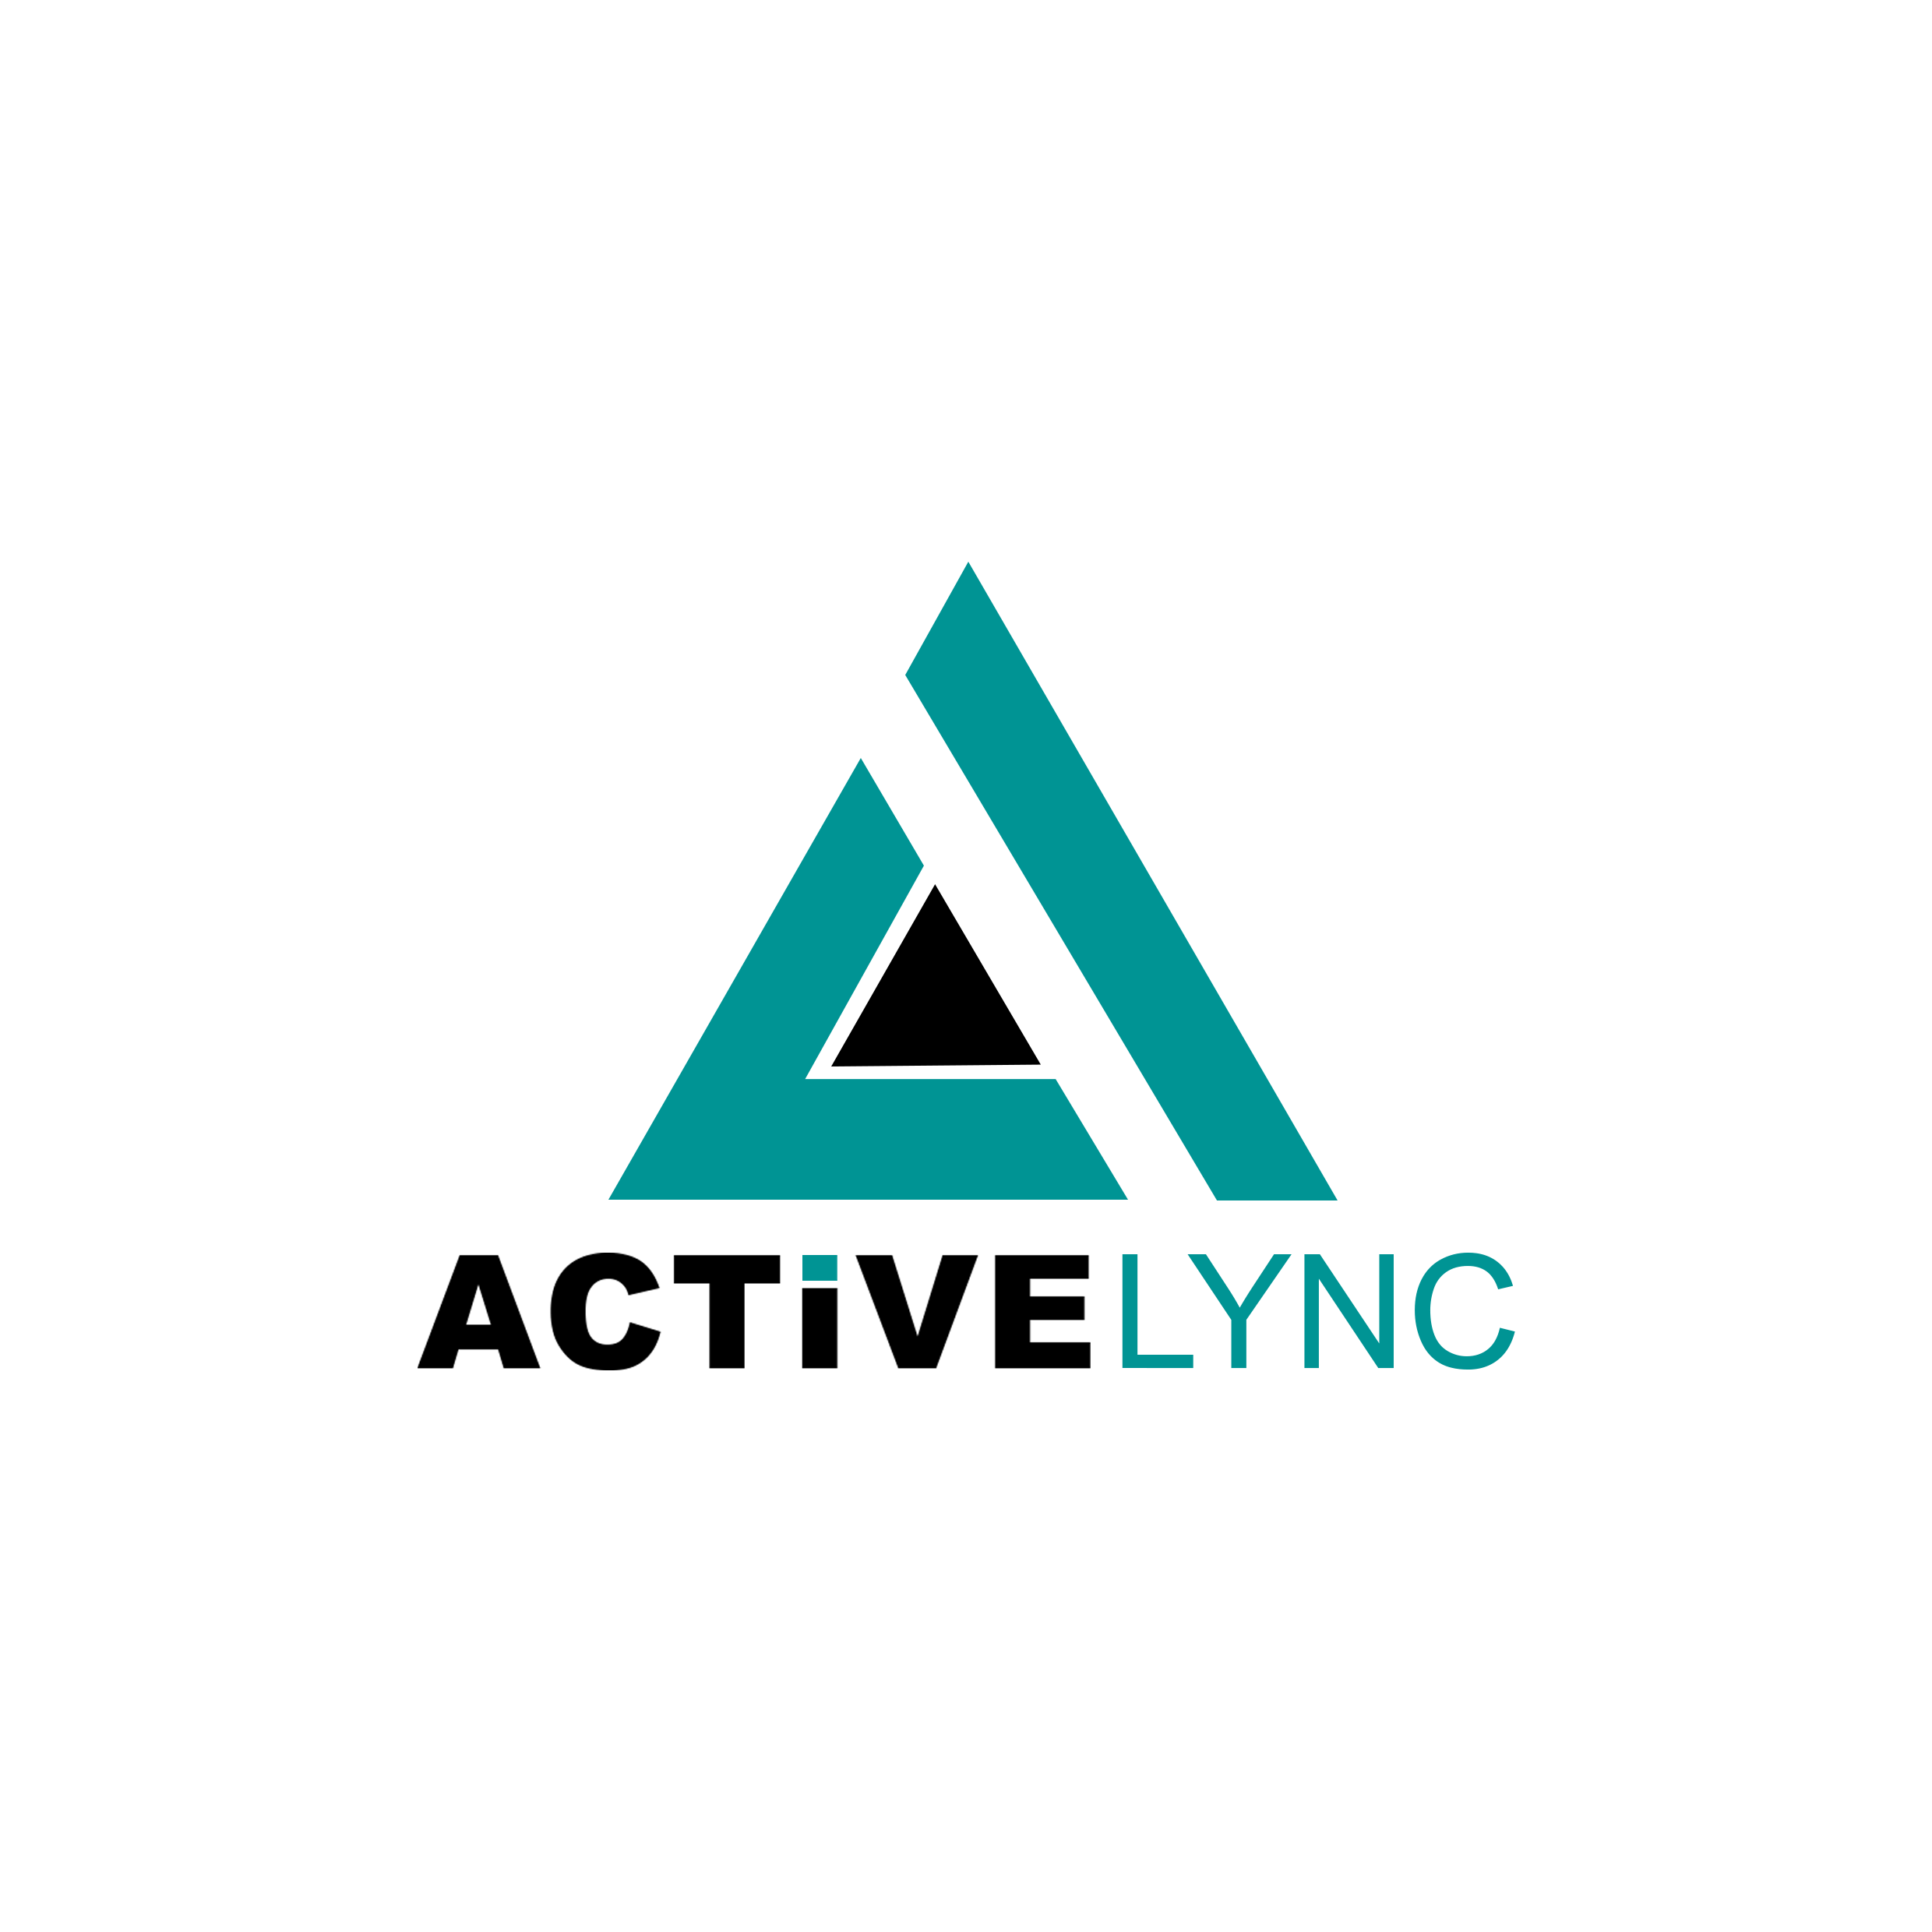 Active Lync on white background